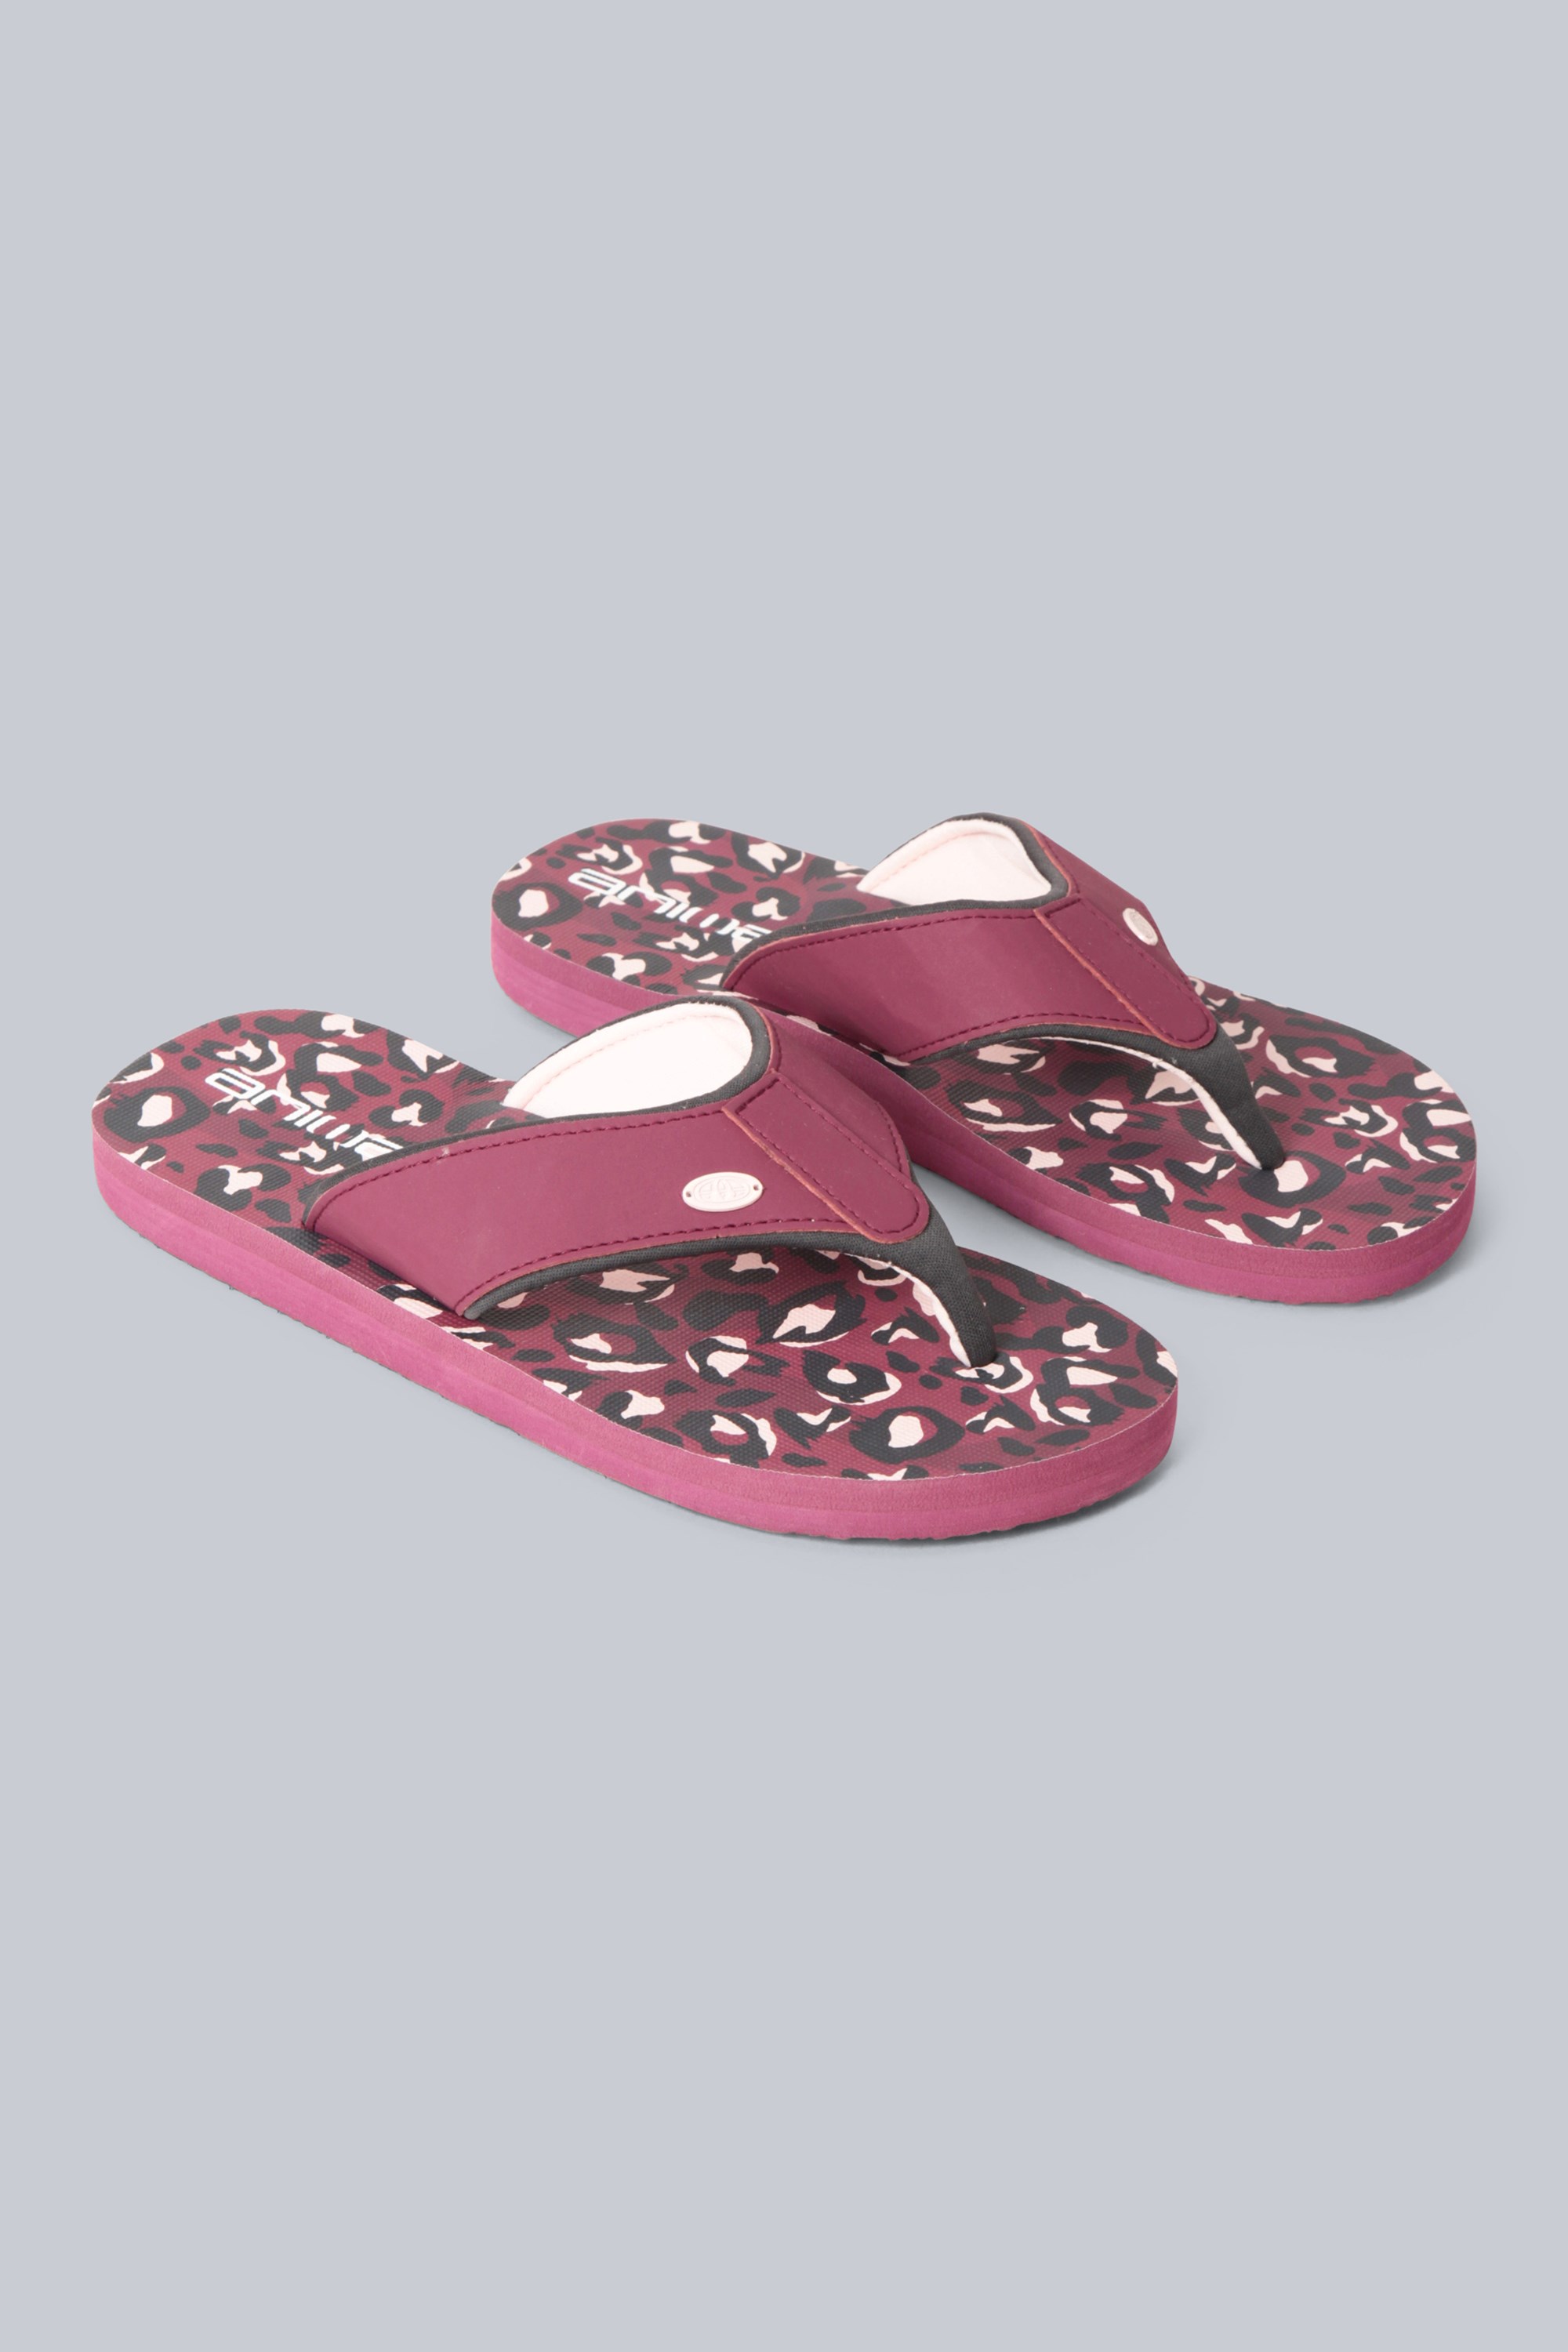 Swish Womens Recycled Flip-Flops - Pink